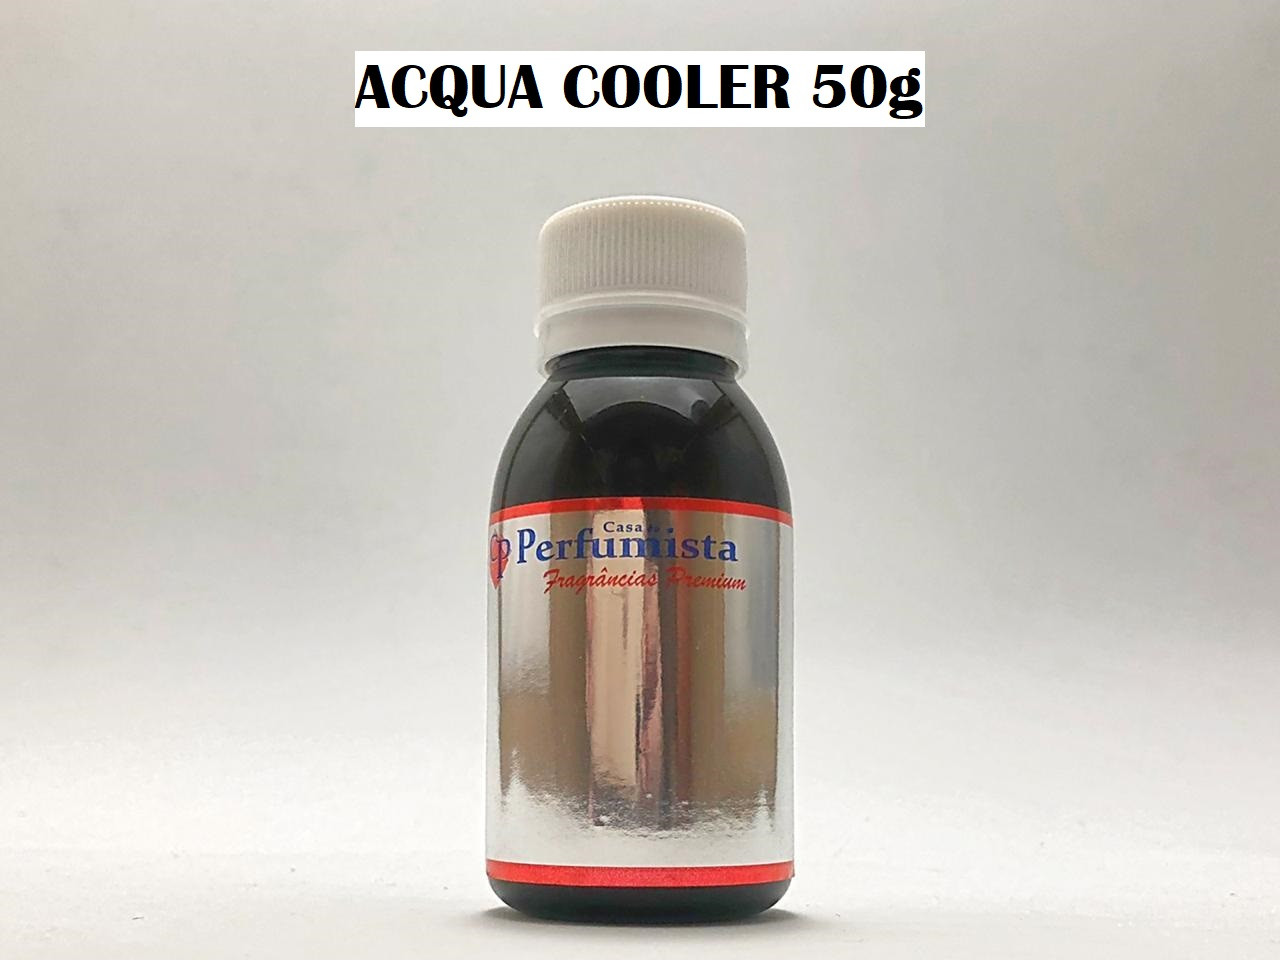 ACQUA COOLER 50g - Inspiração: Cool Water Masculino